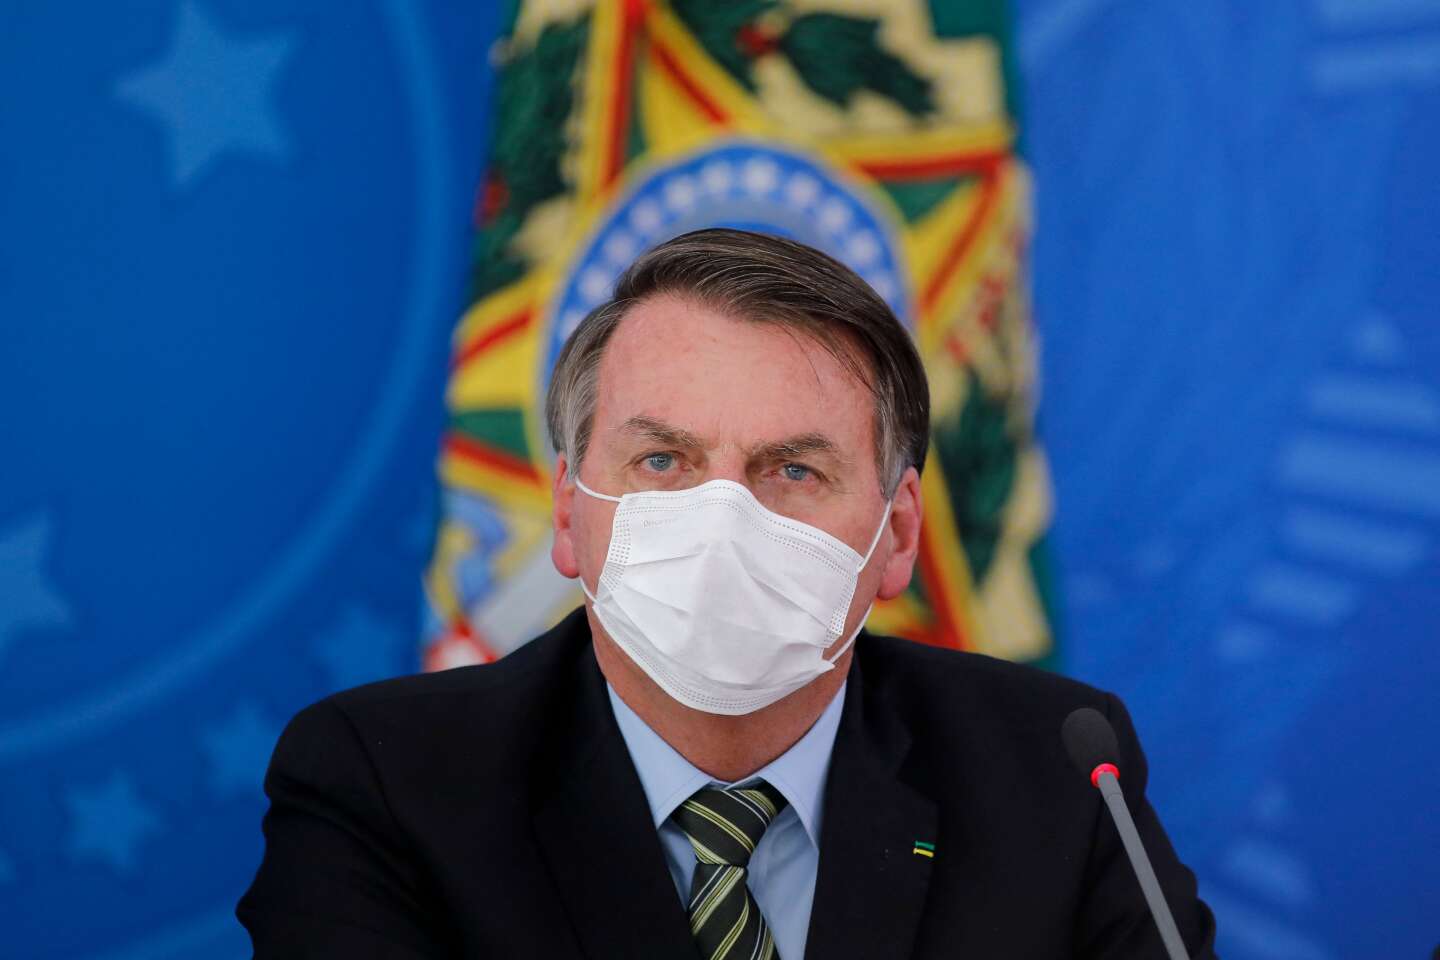 In Brazil, Jair Bolsonaro was accused of falsifying Covid-19 vaccination certificates.